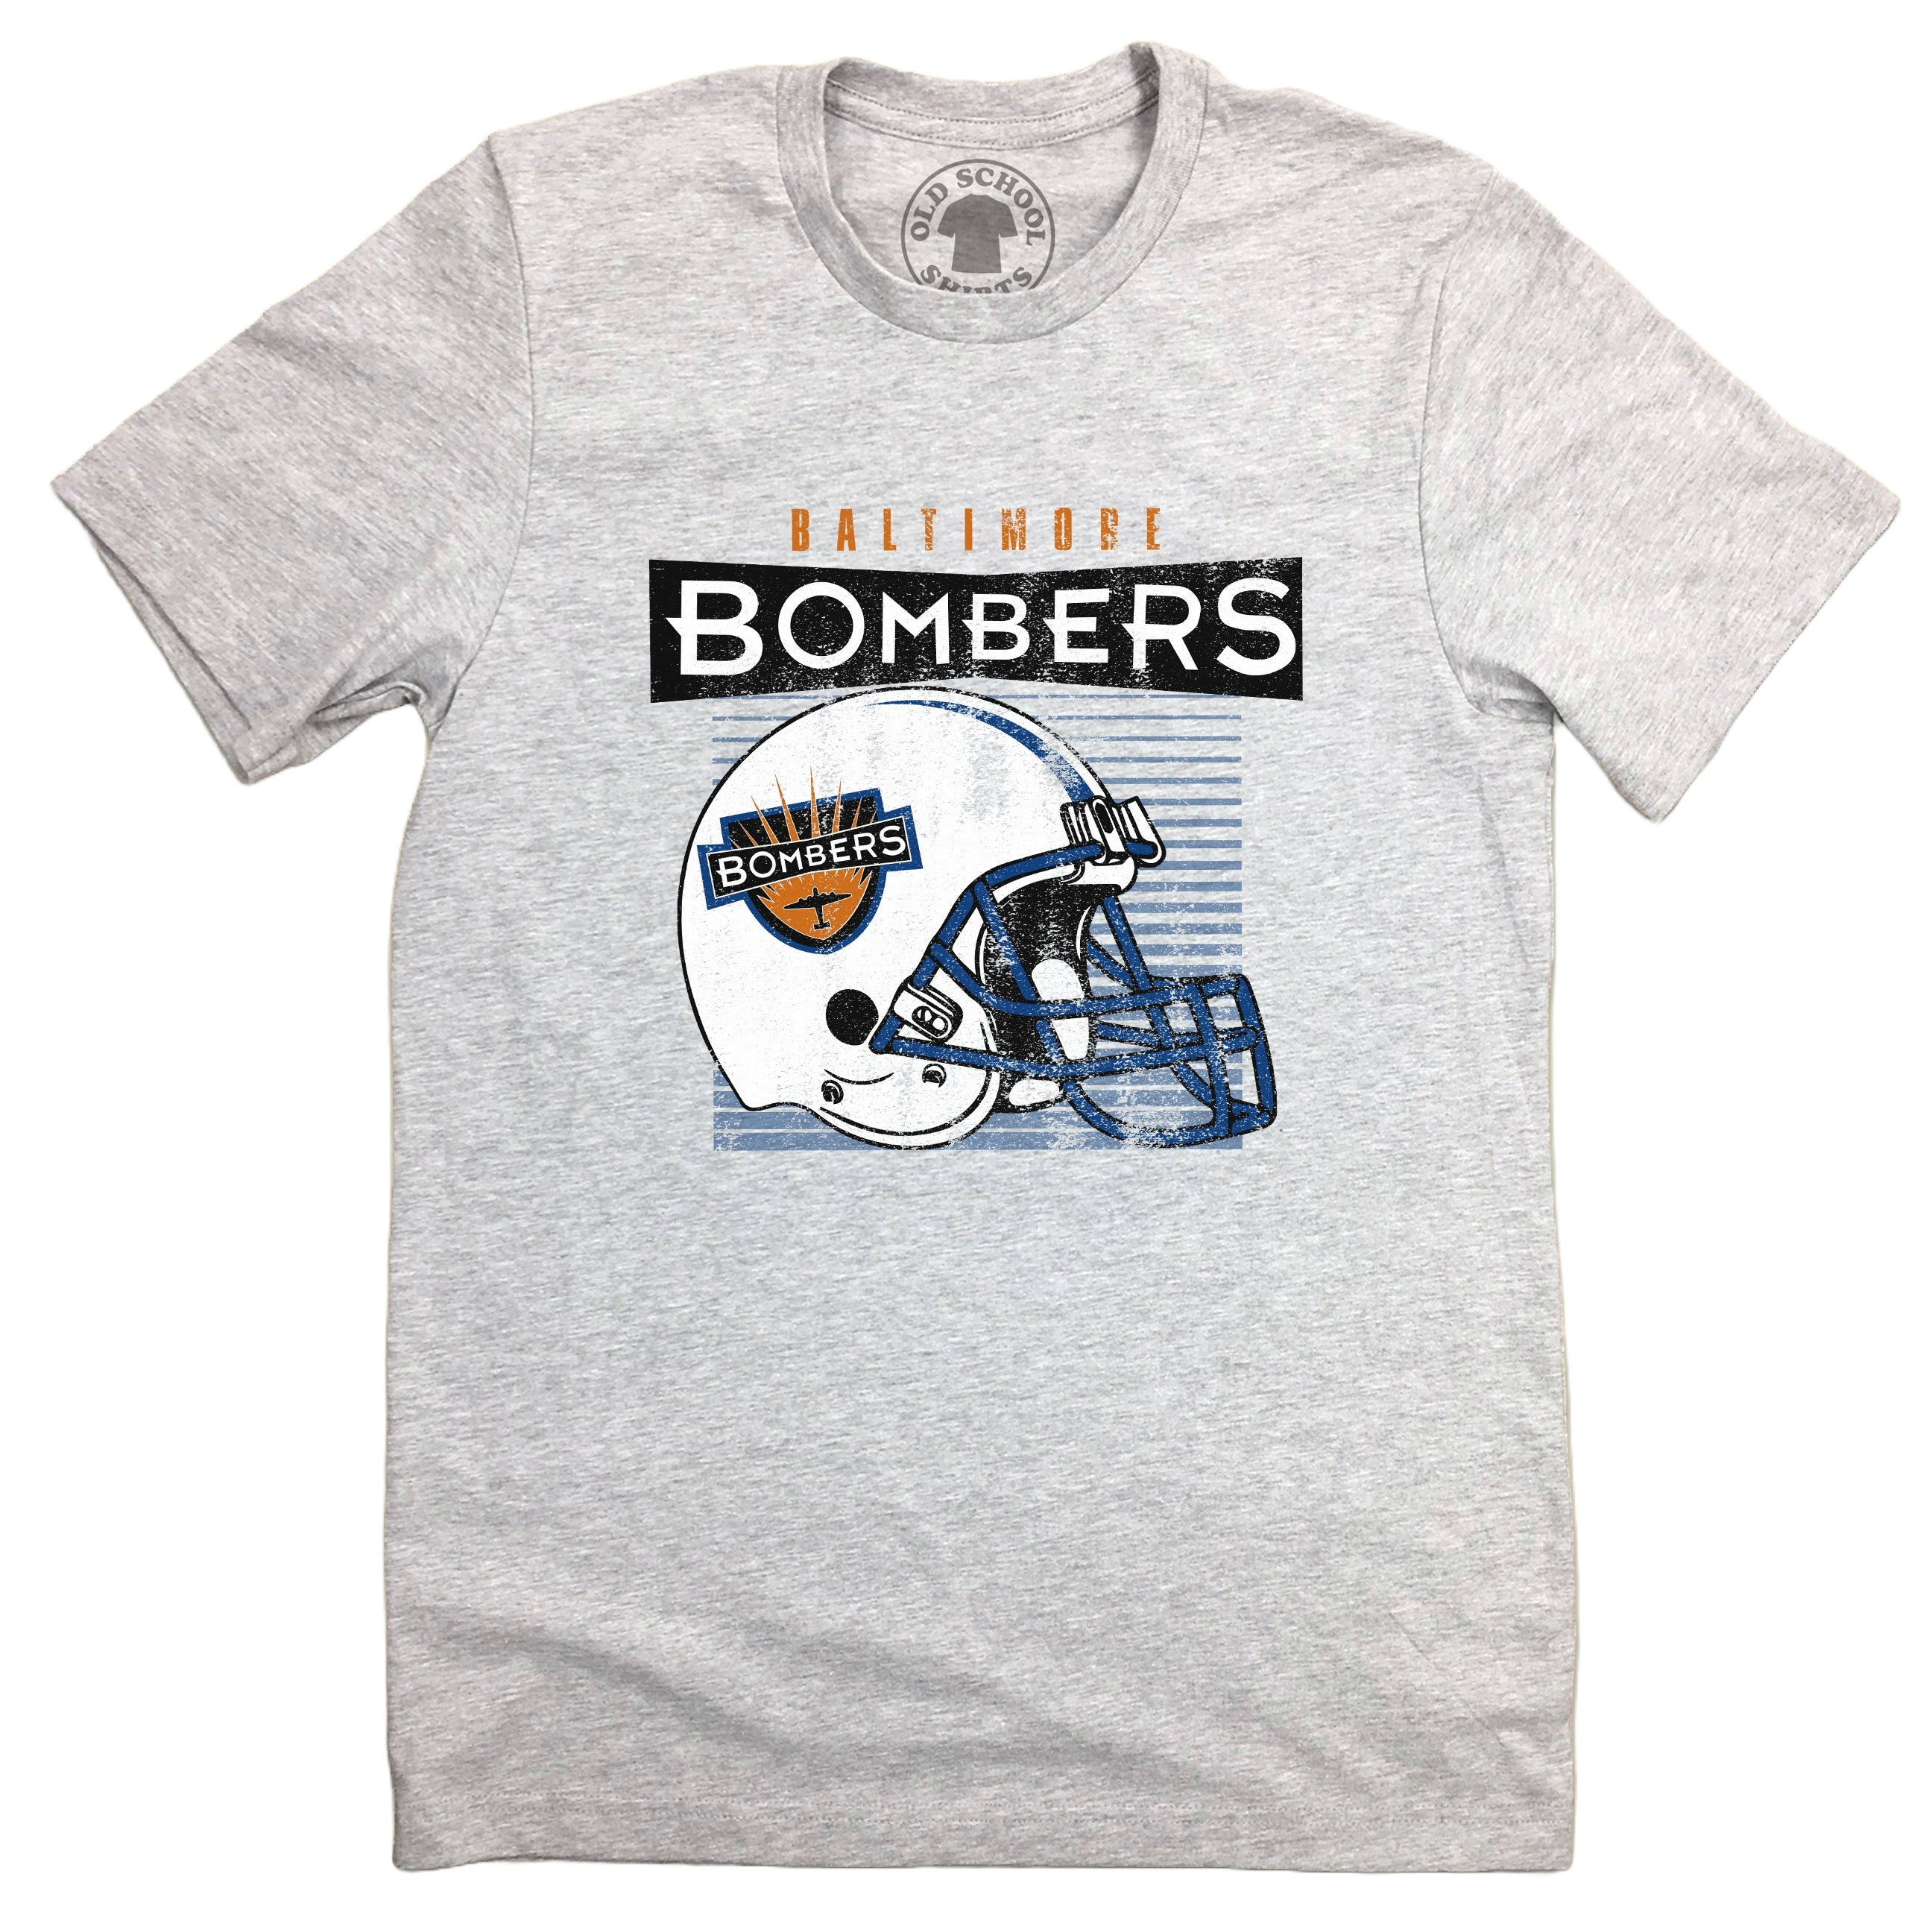 Baltimore Bombers, Vintage Football Apparel